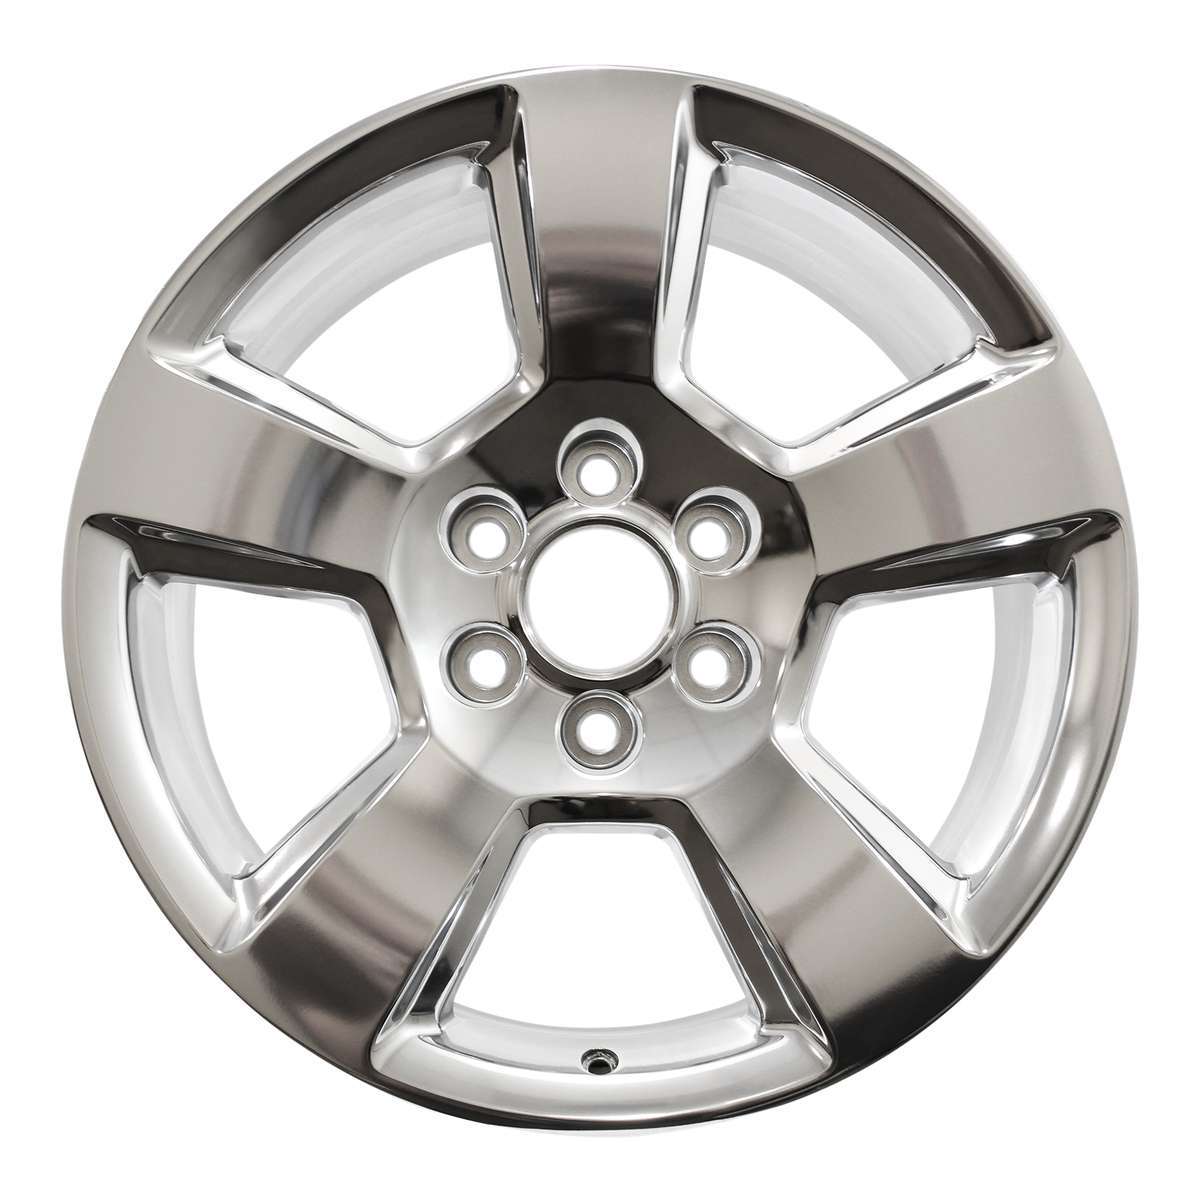 2021 GMC Yukon XL New 20" Replacement Wheel Rim RW5652P